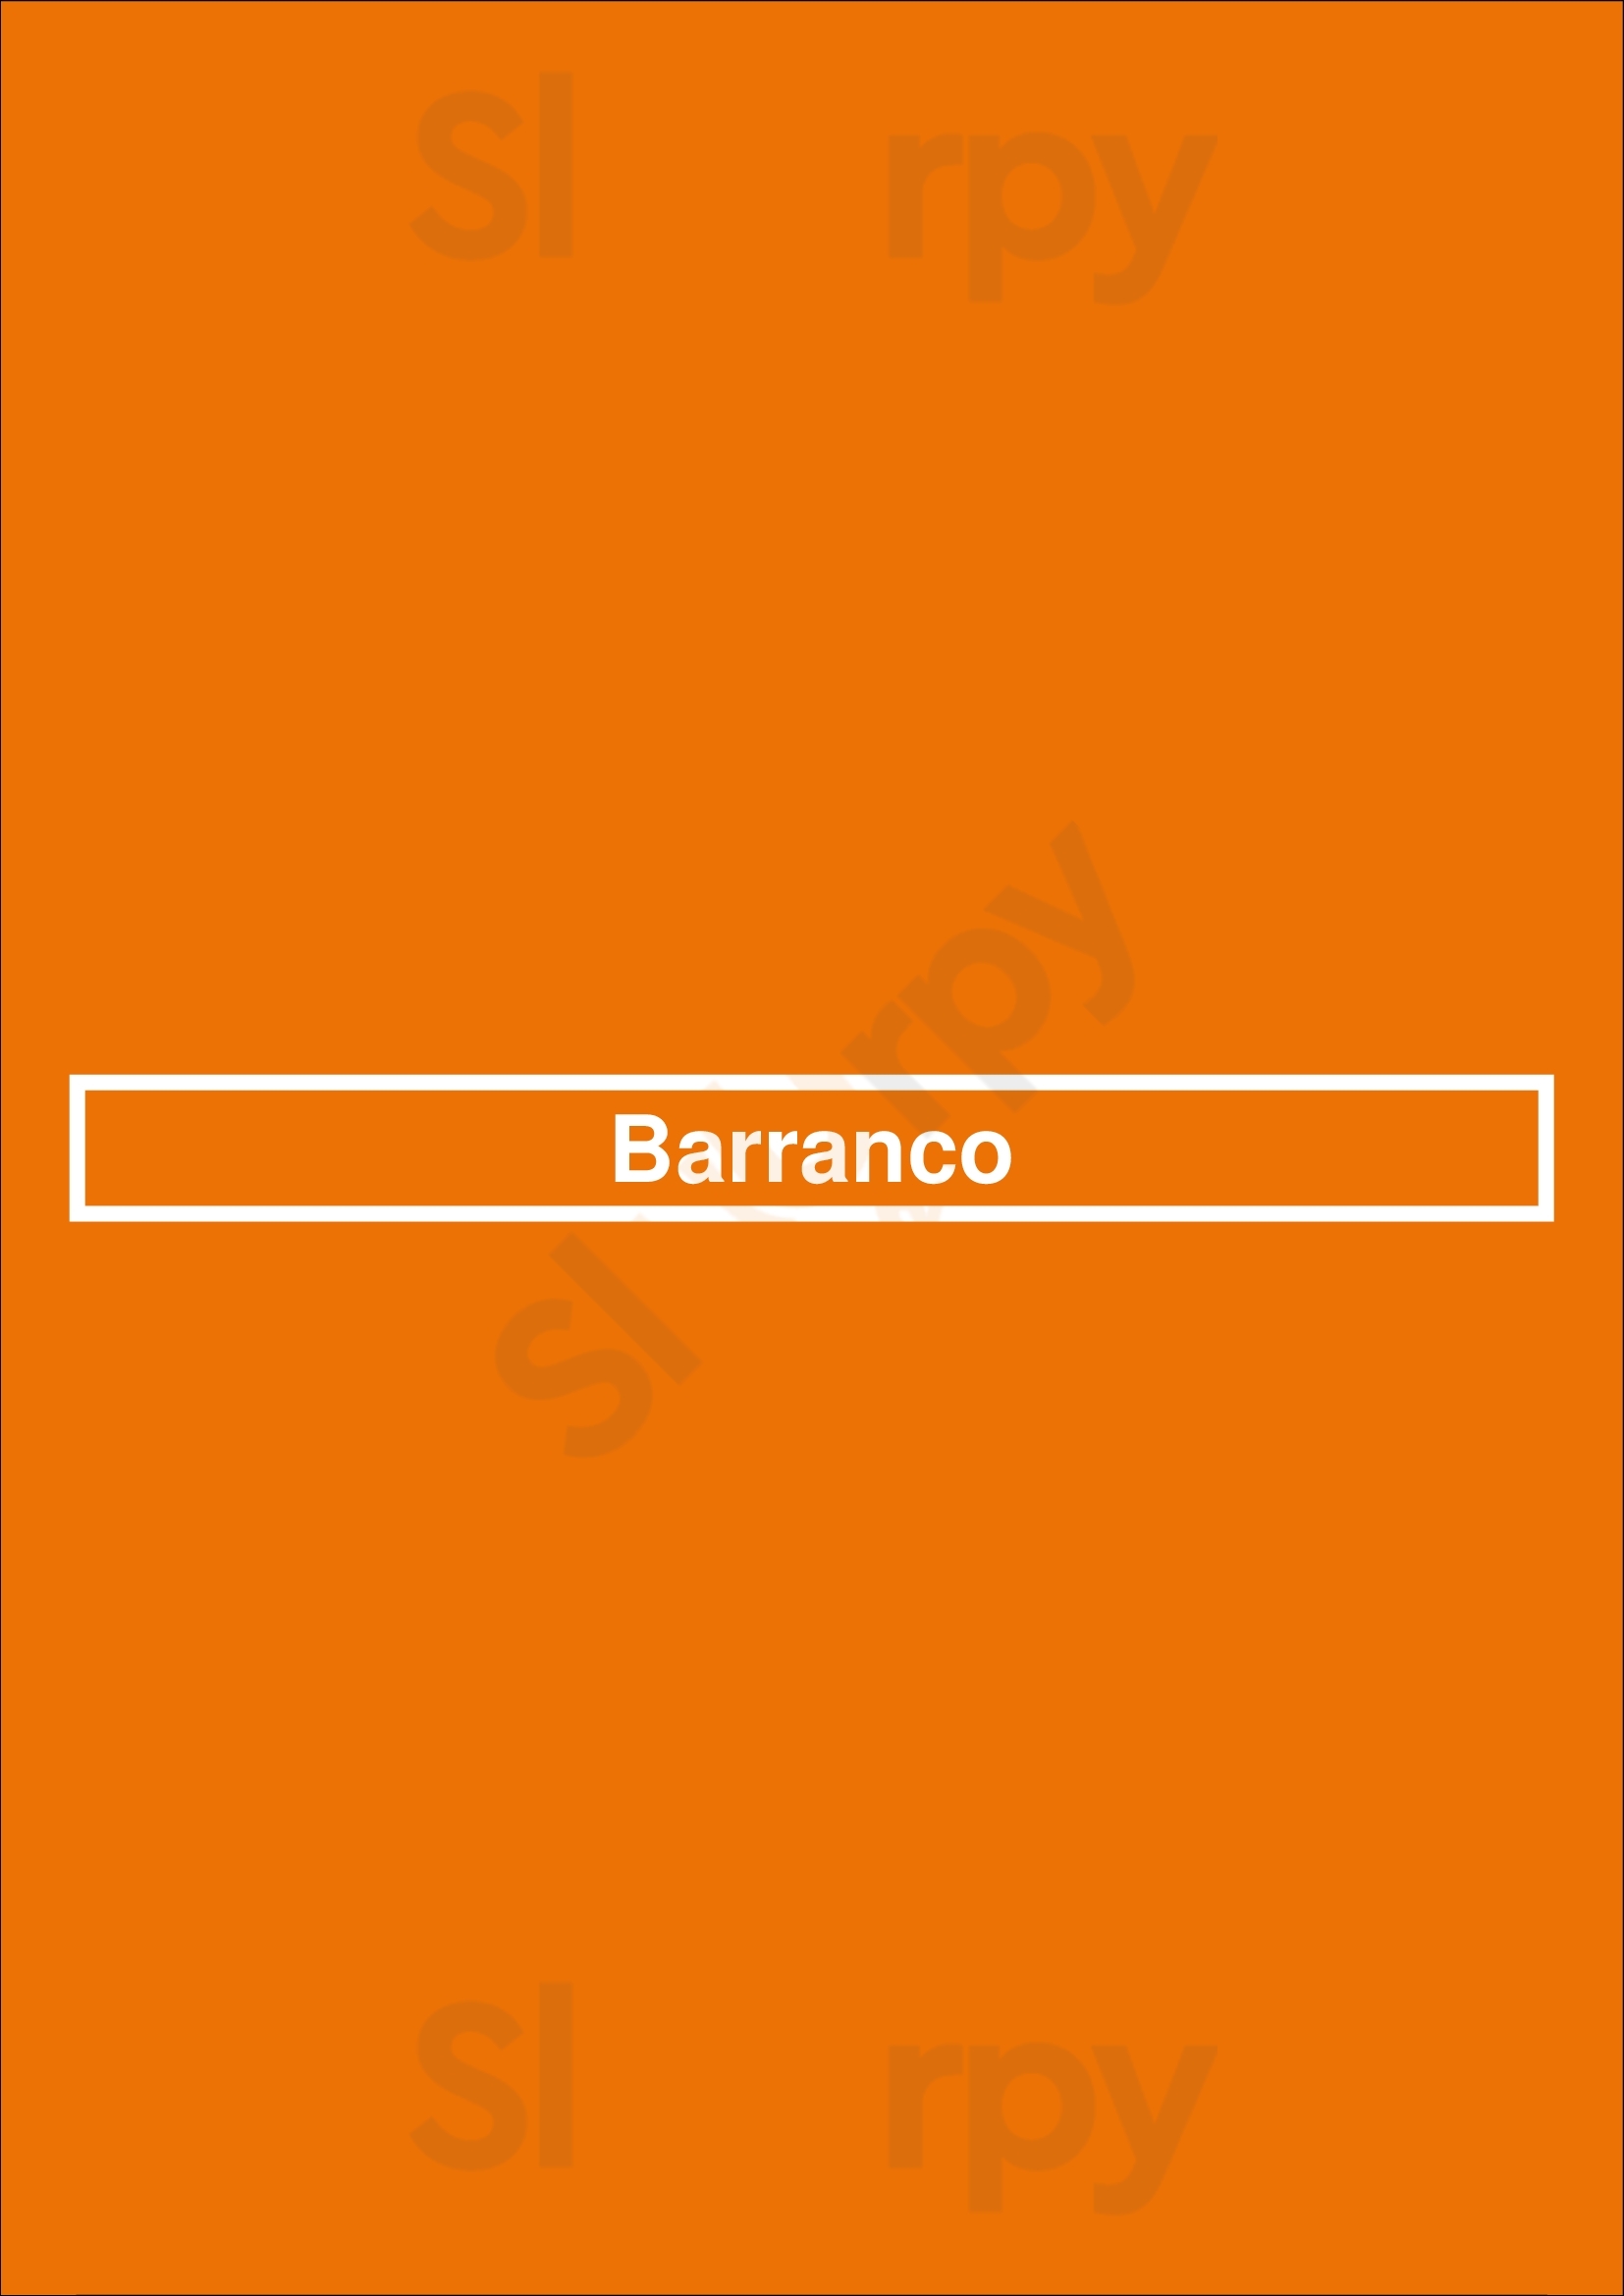 Barranco Lafayette Menu - 1